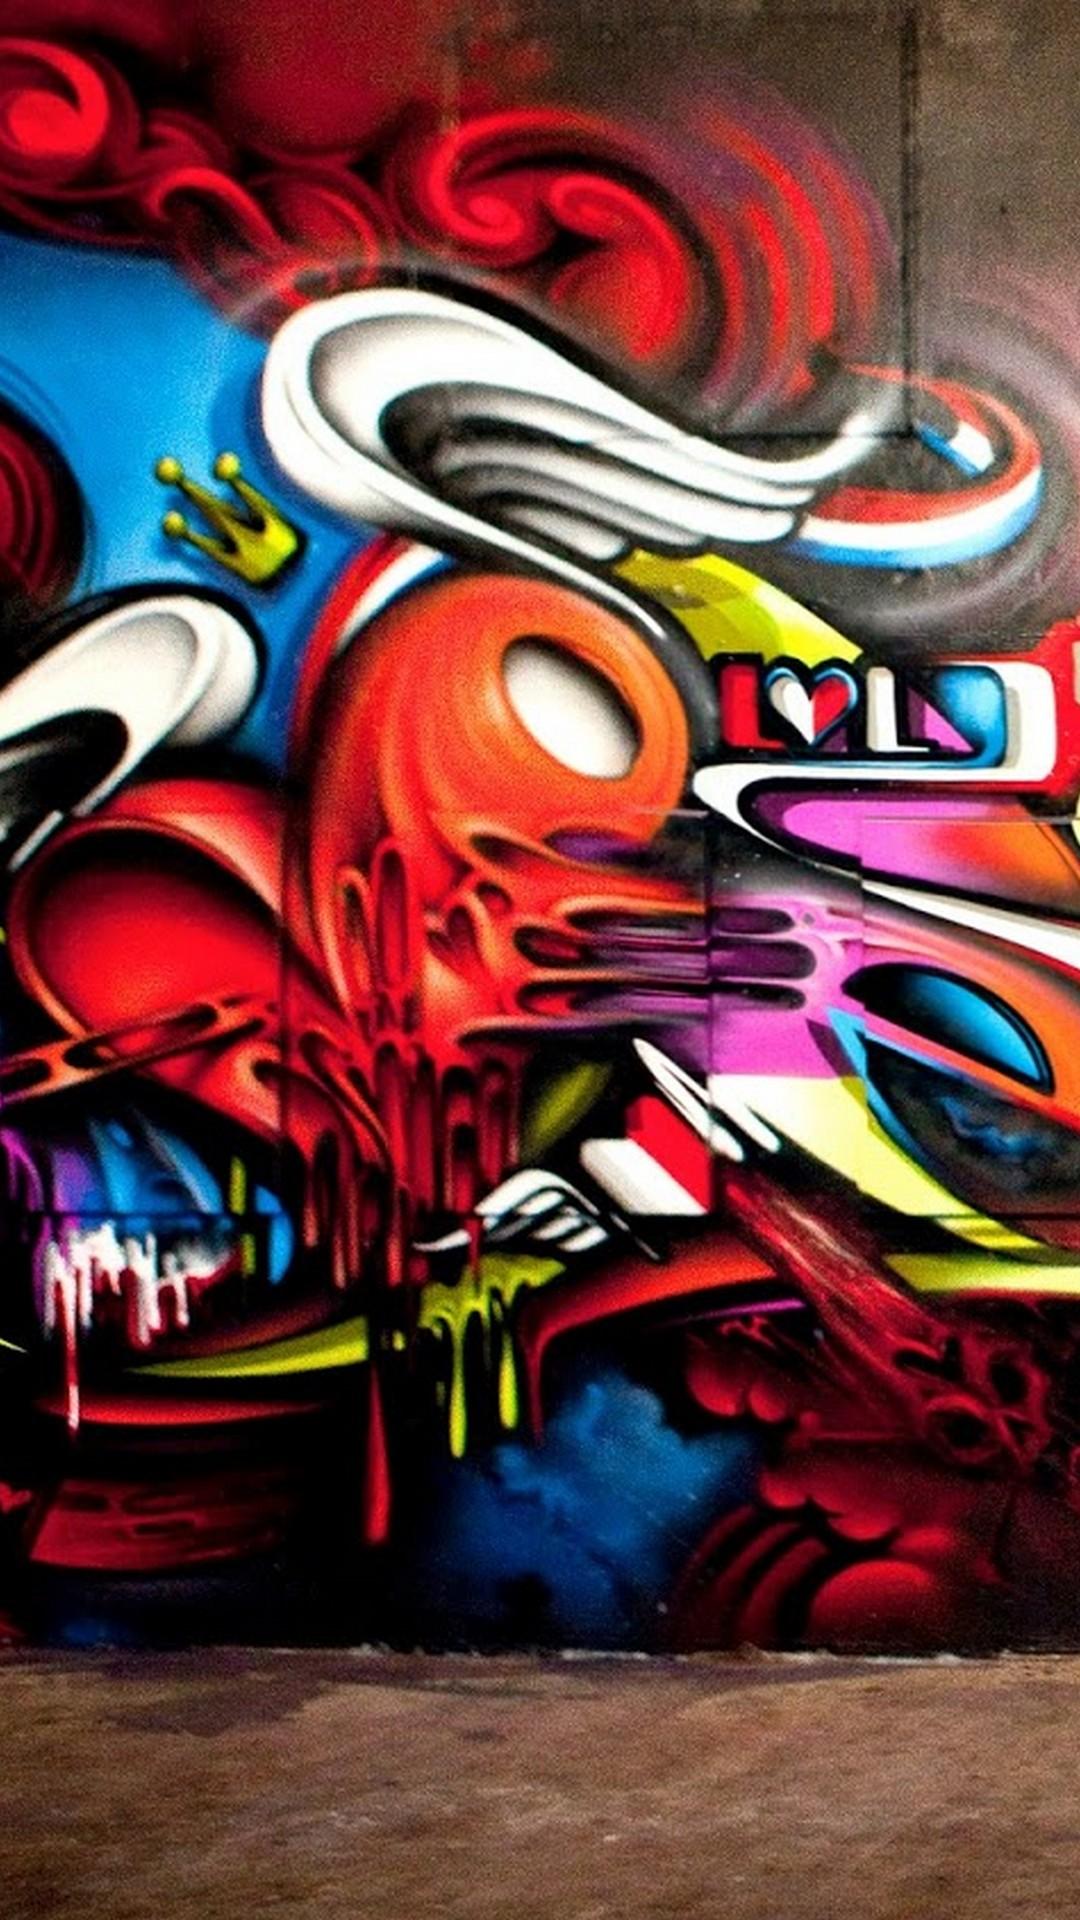 Graffiti Art iPhone Wallpaper 3D iPhone Wallpaper